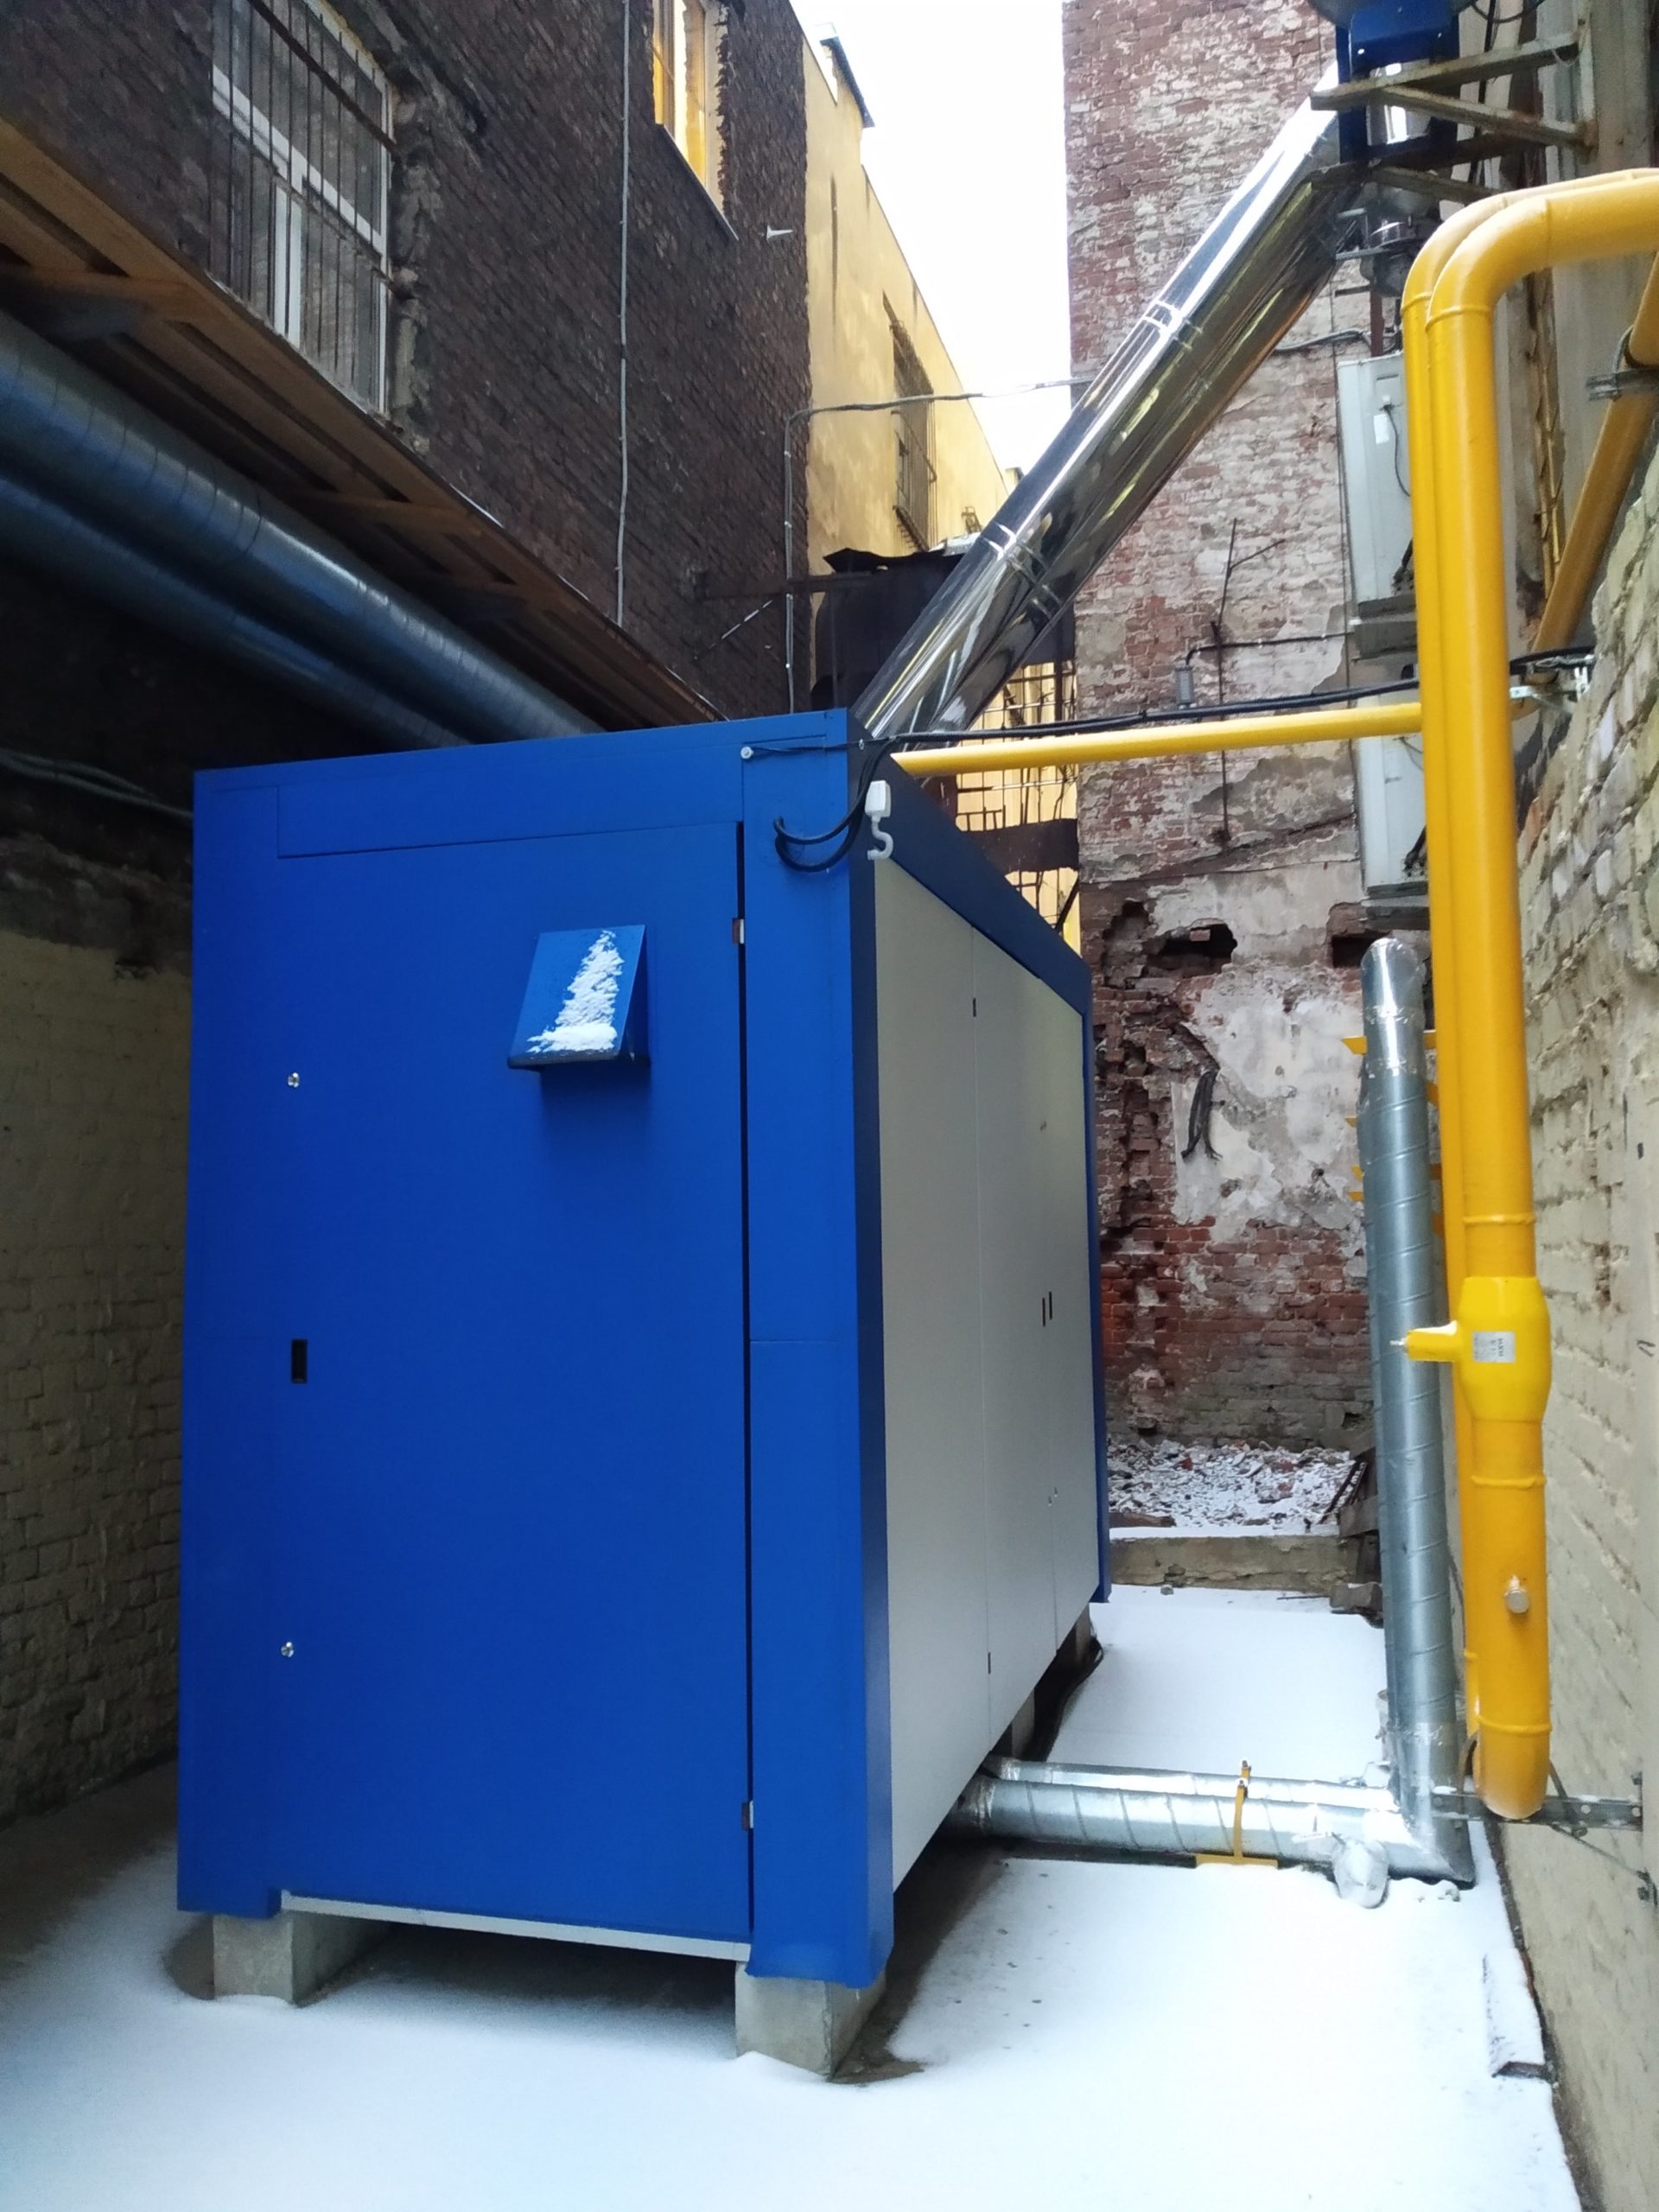 Outdoor heat generating unit TGU-NORD 350 M